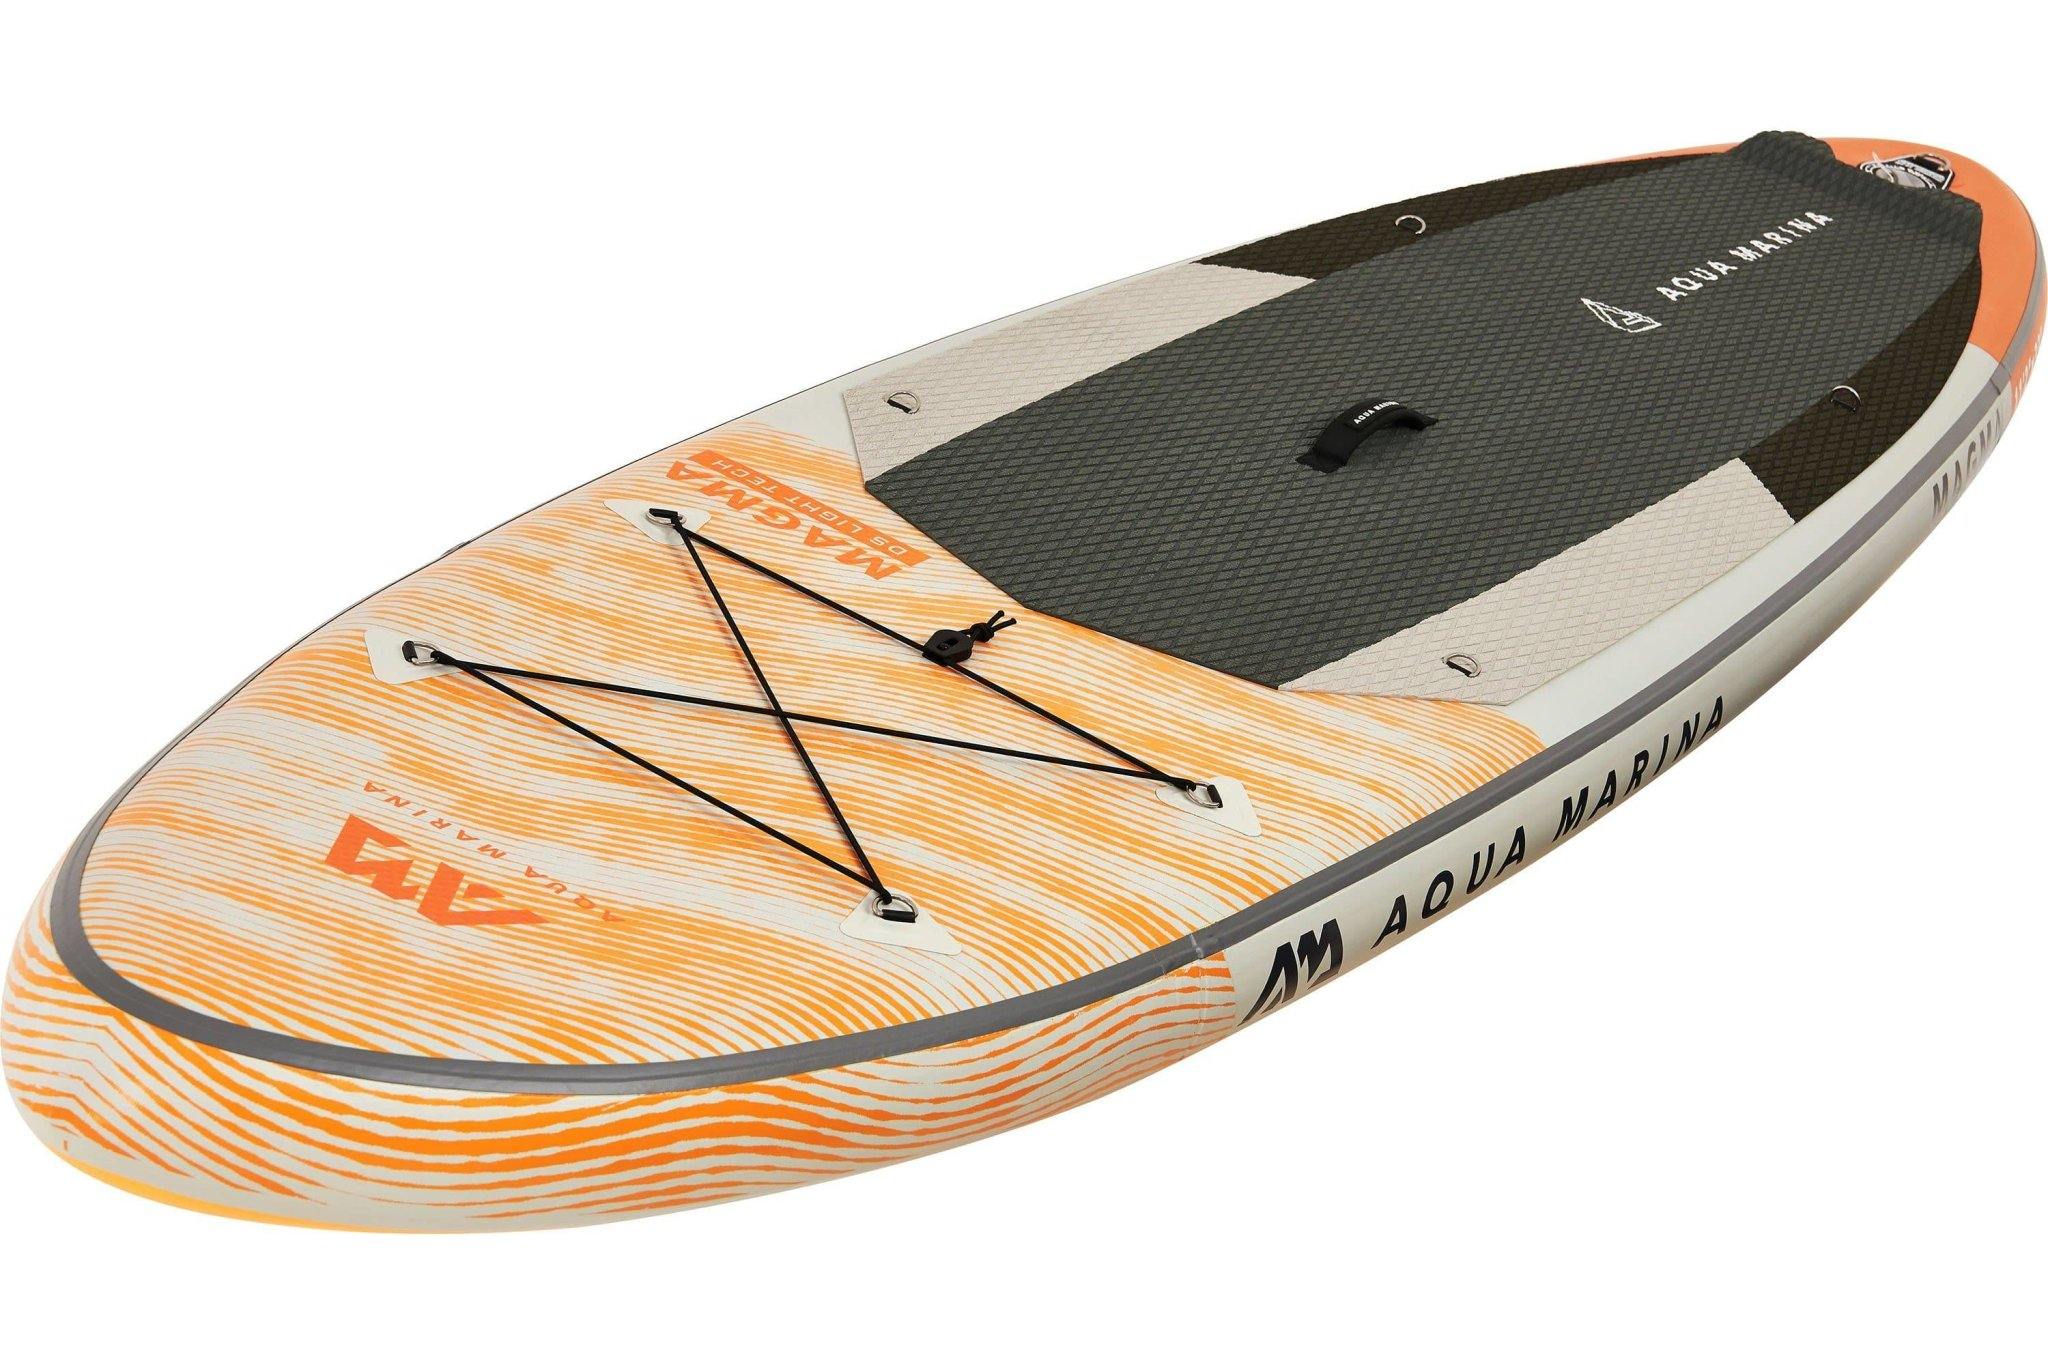 Magma Advanced All-Around iSUP Paddle Board - Dti Direct USA